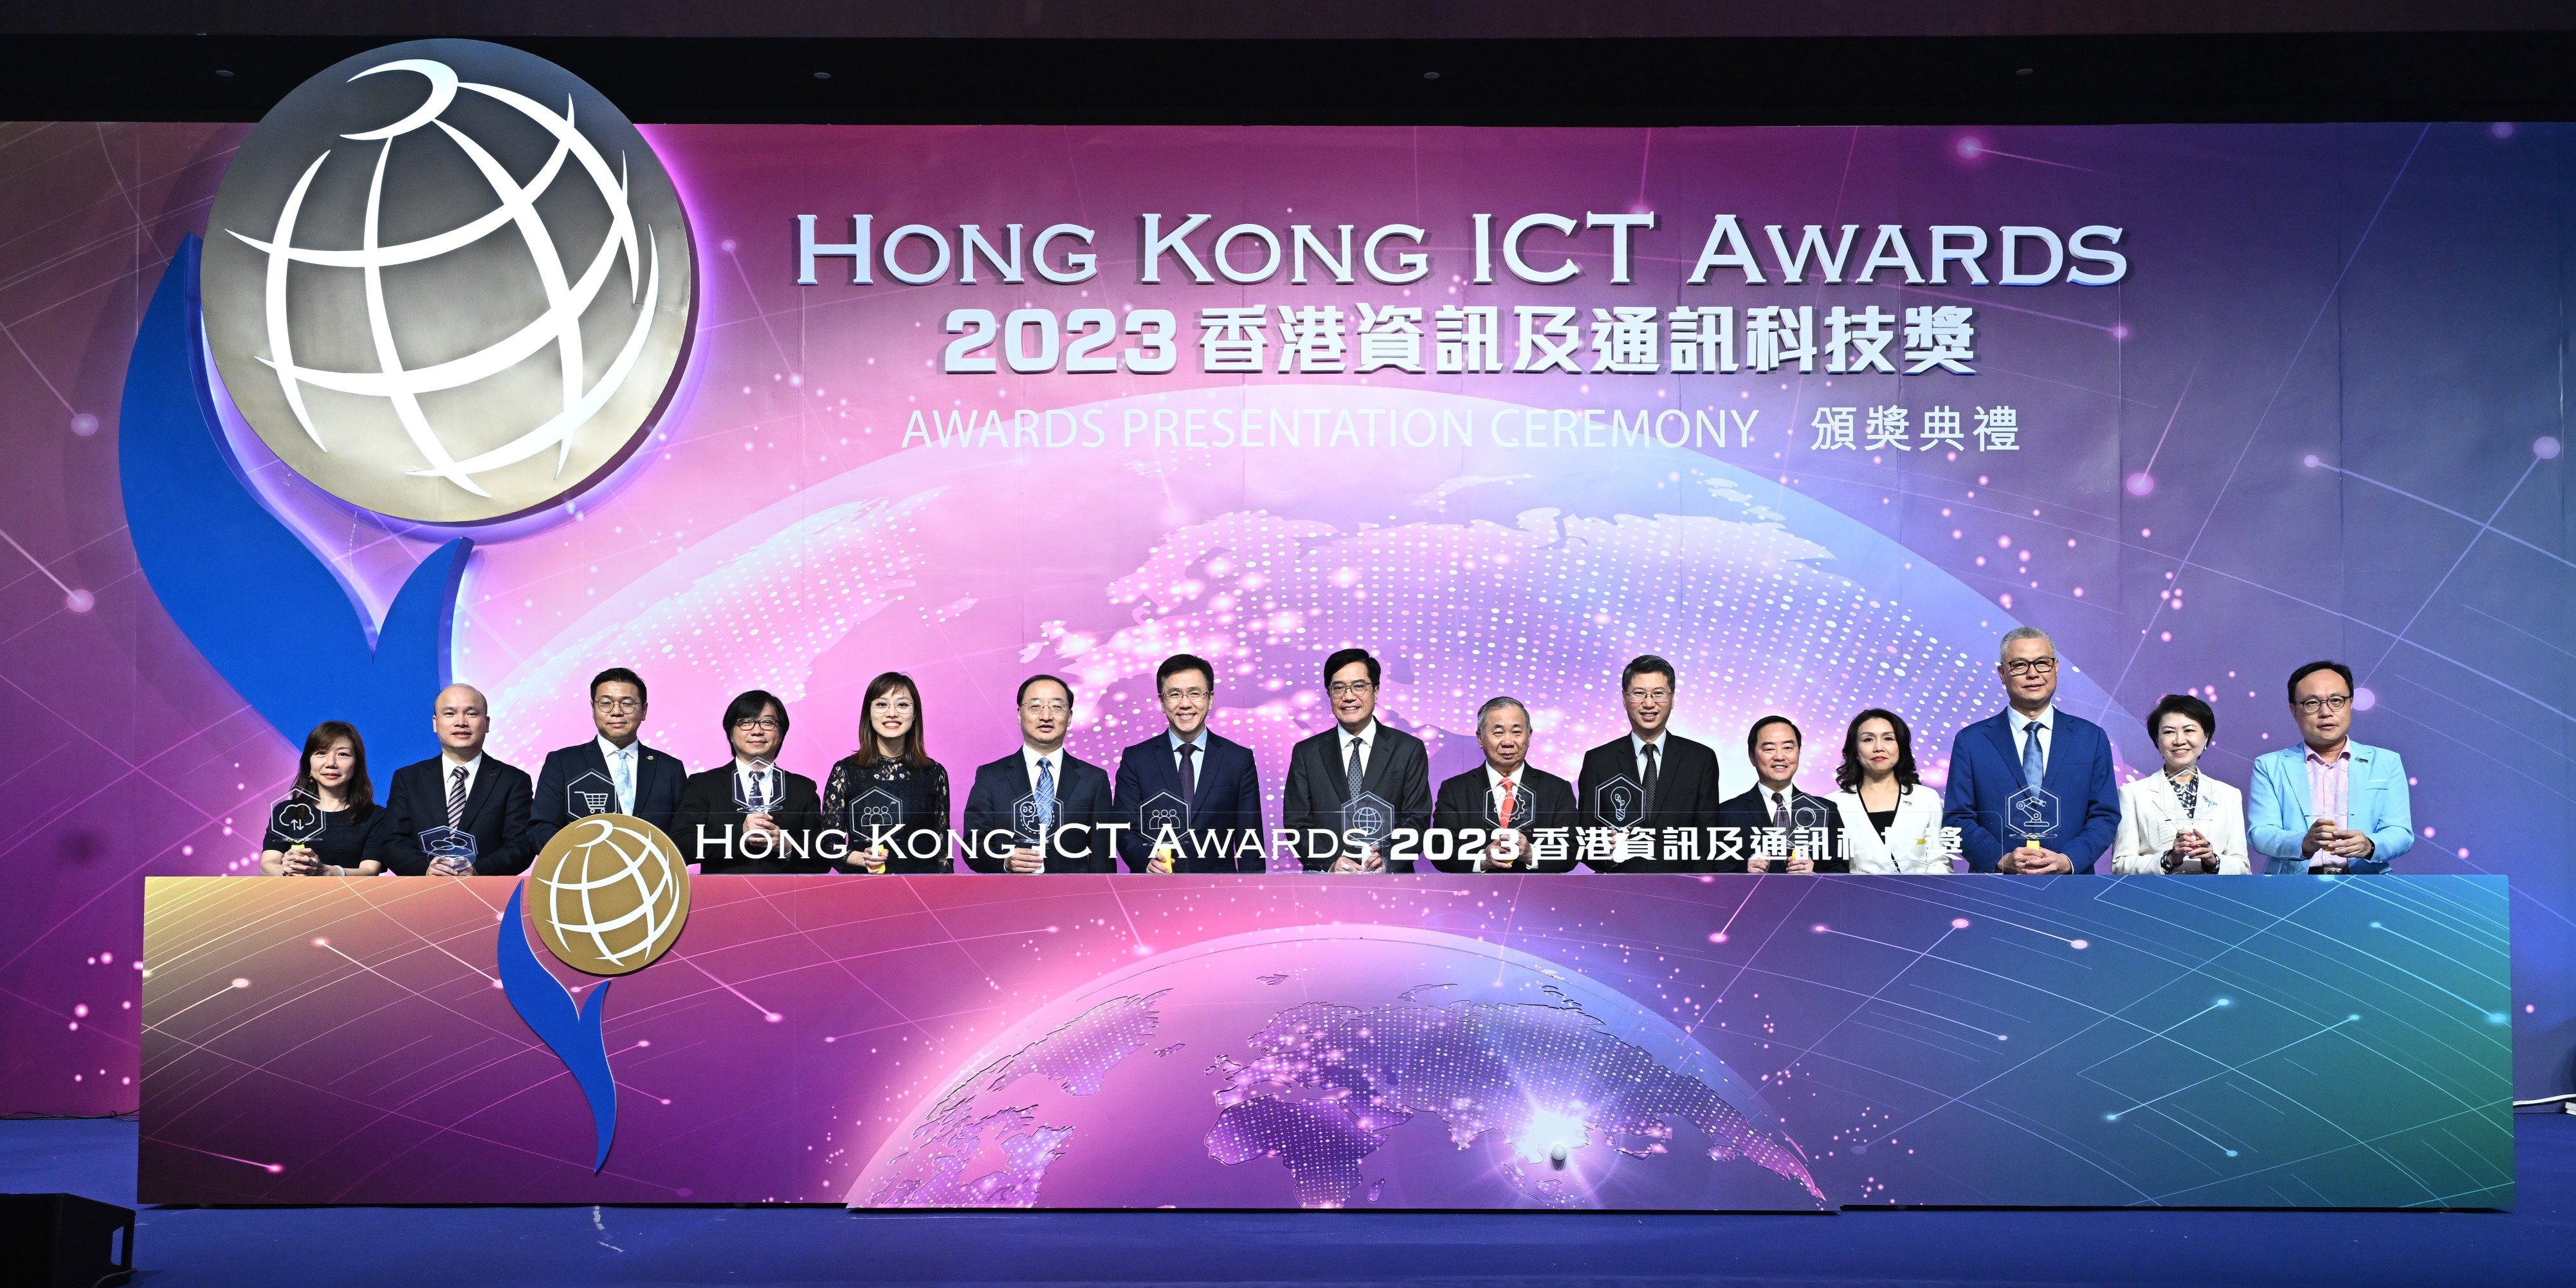 Hong Kong ICT Awards 2023 Awards Presentation Ceremony Kick-off Ceremony (before)